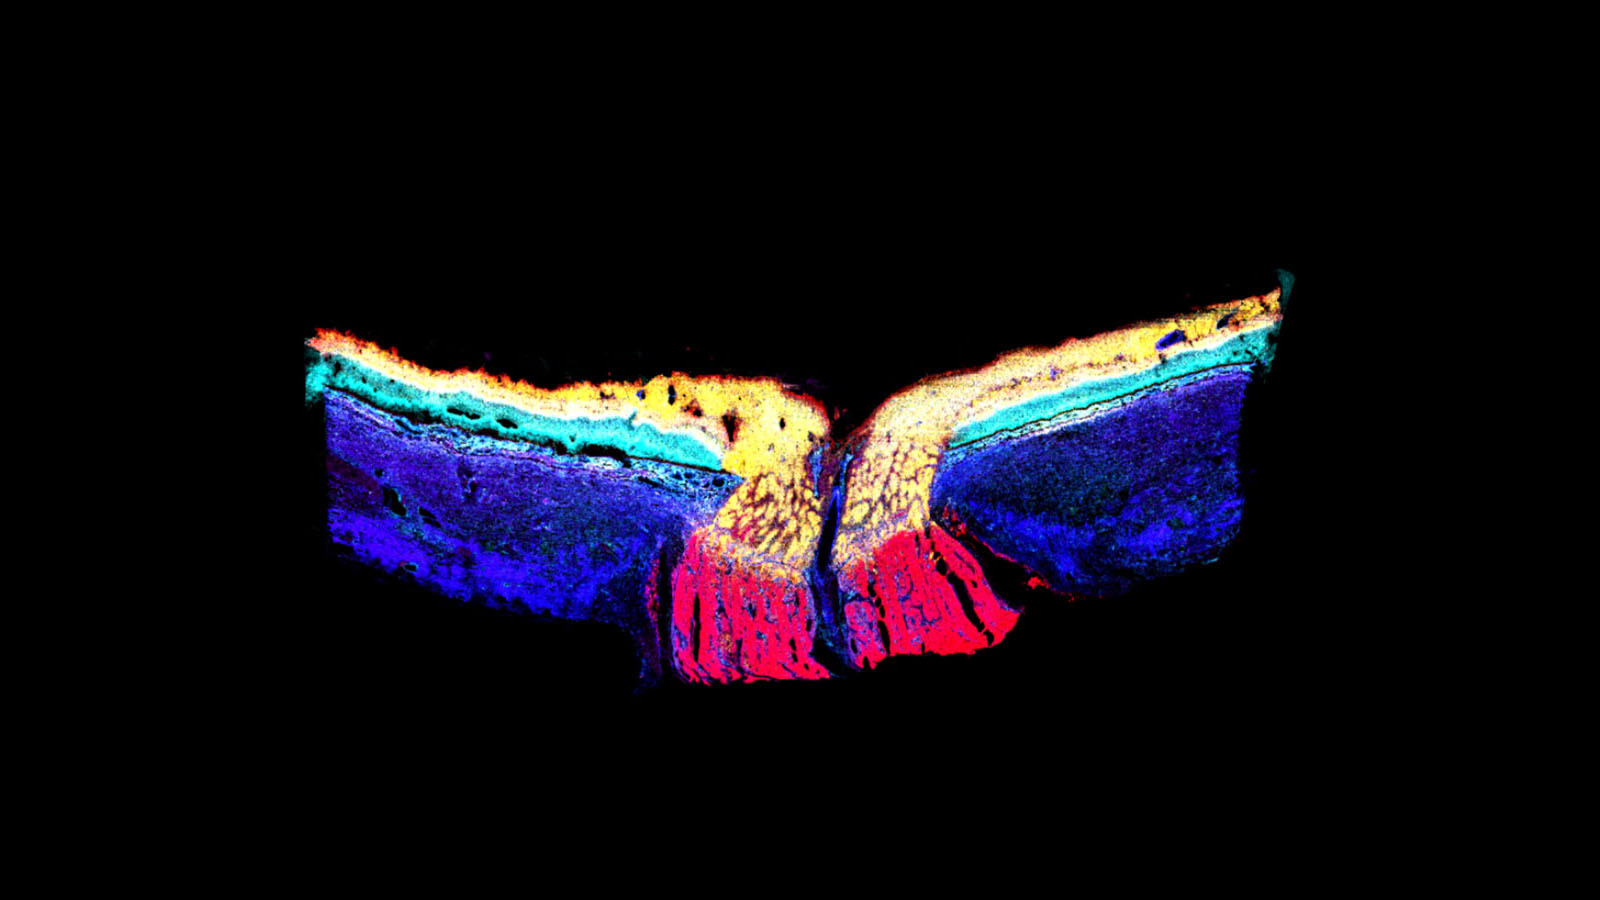 MALDI IMS image of a human optic nerve courtesy of Dr. David Anderson at Vanderbilt University